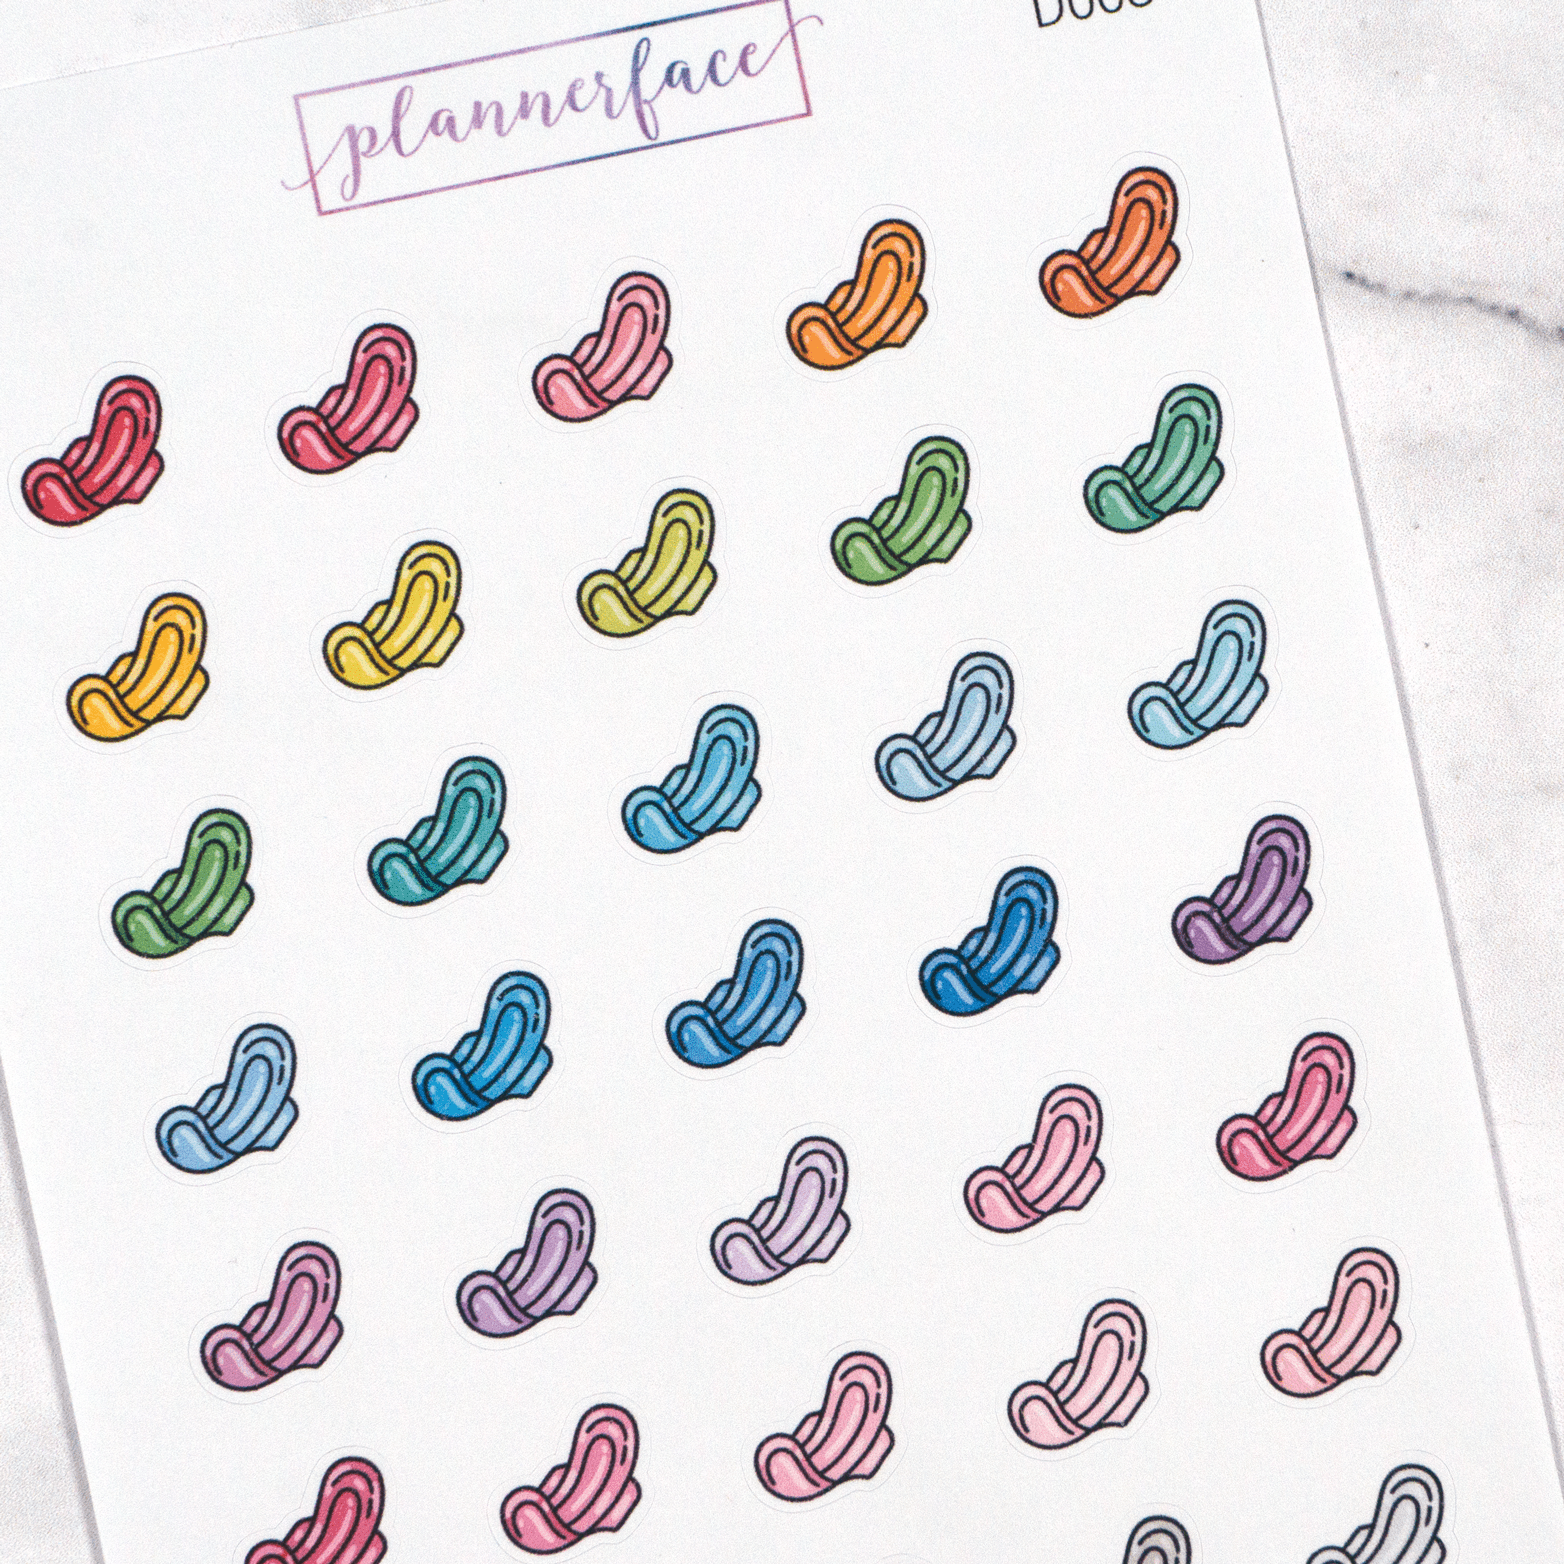 Menstrual Pad Multicolour Doodles by Plannerface